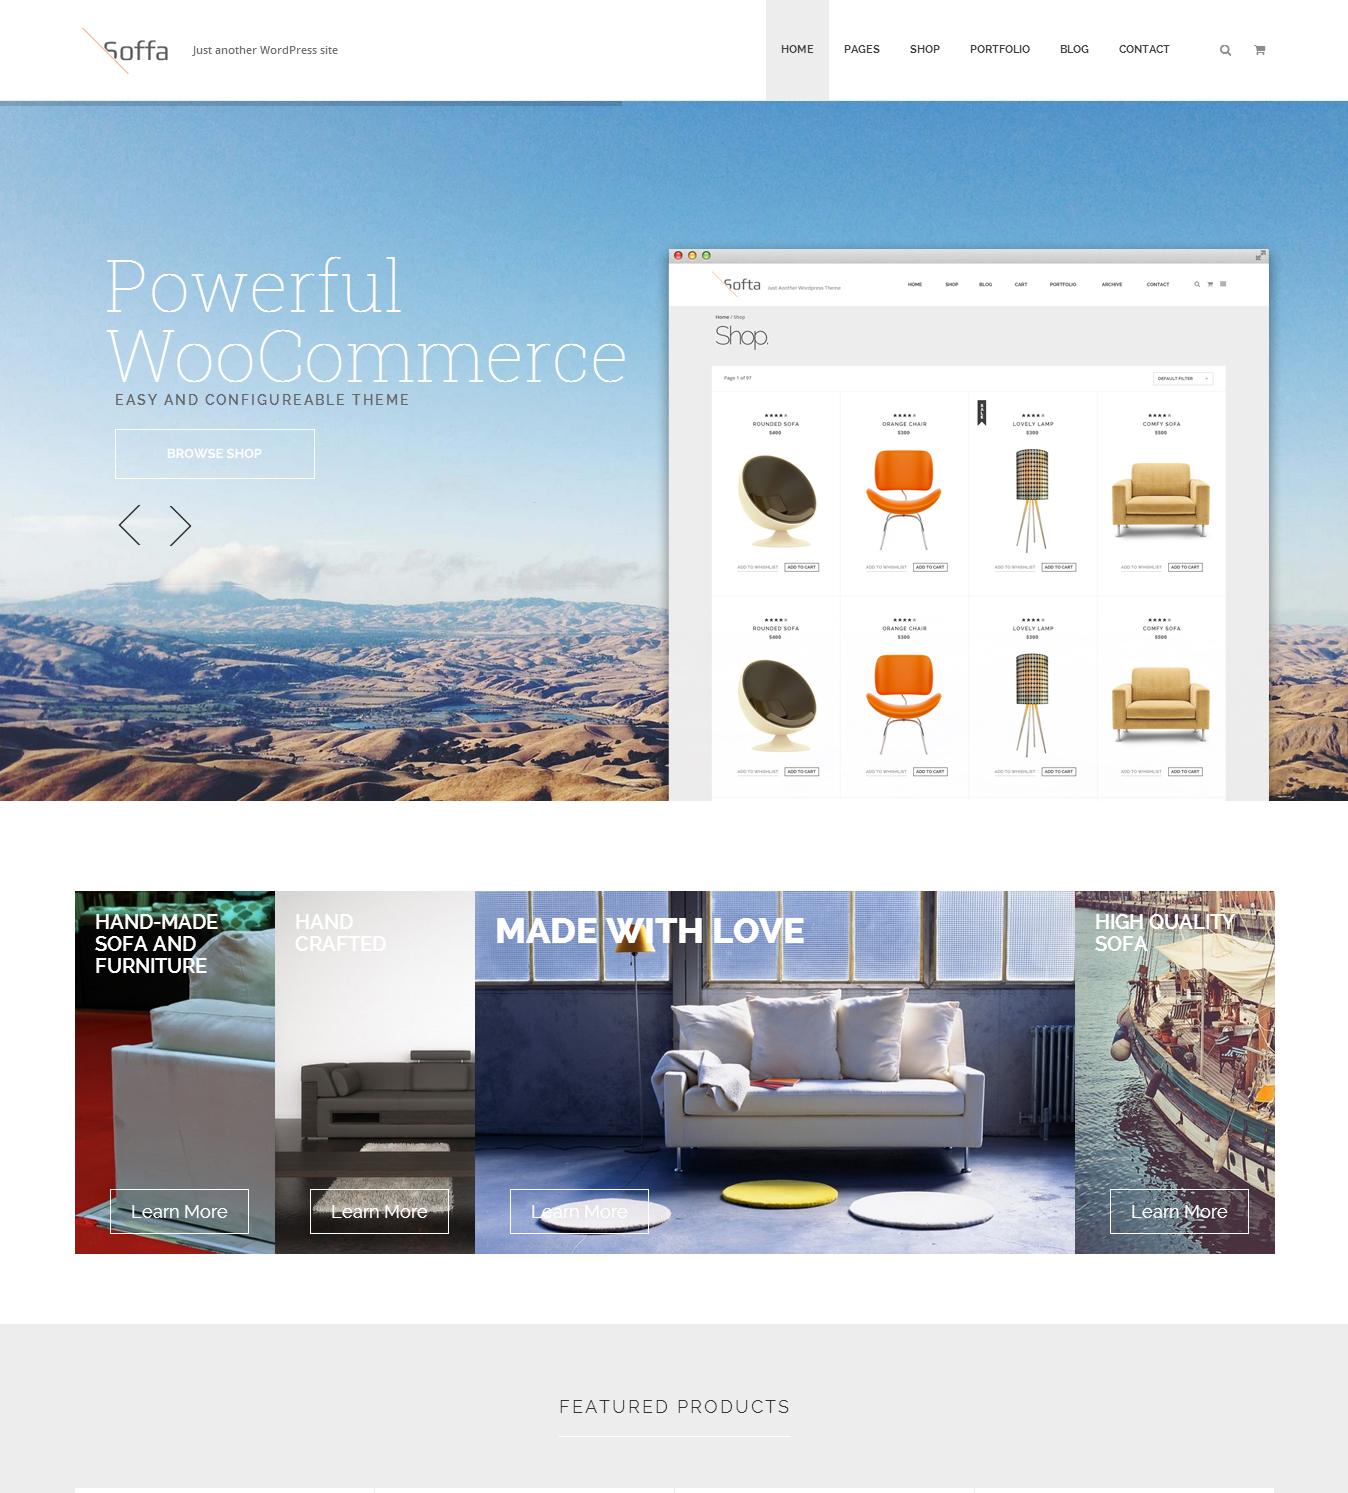 Best WordPress eCommerce Themes Of 2014